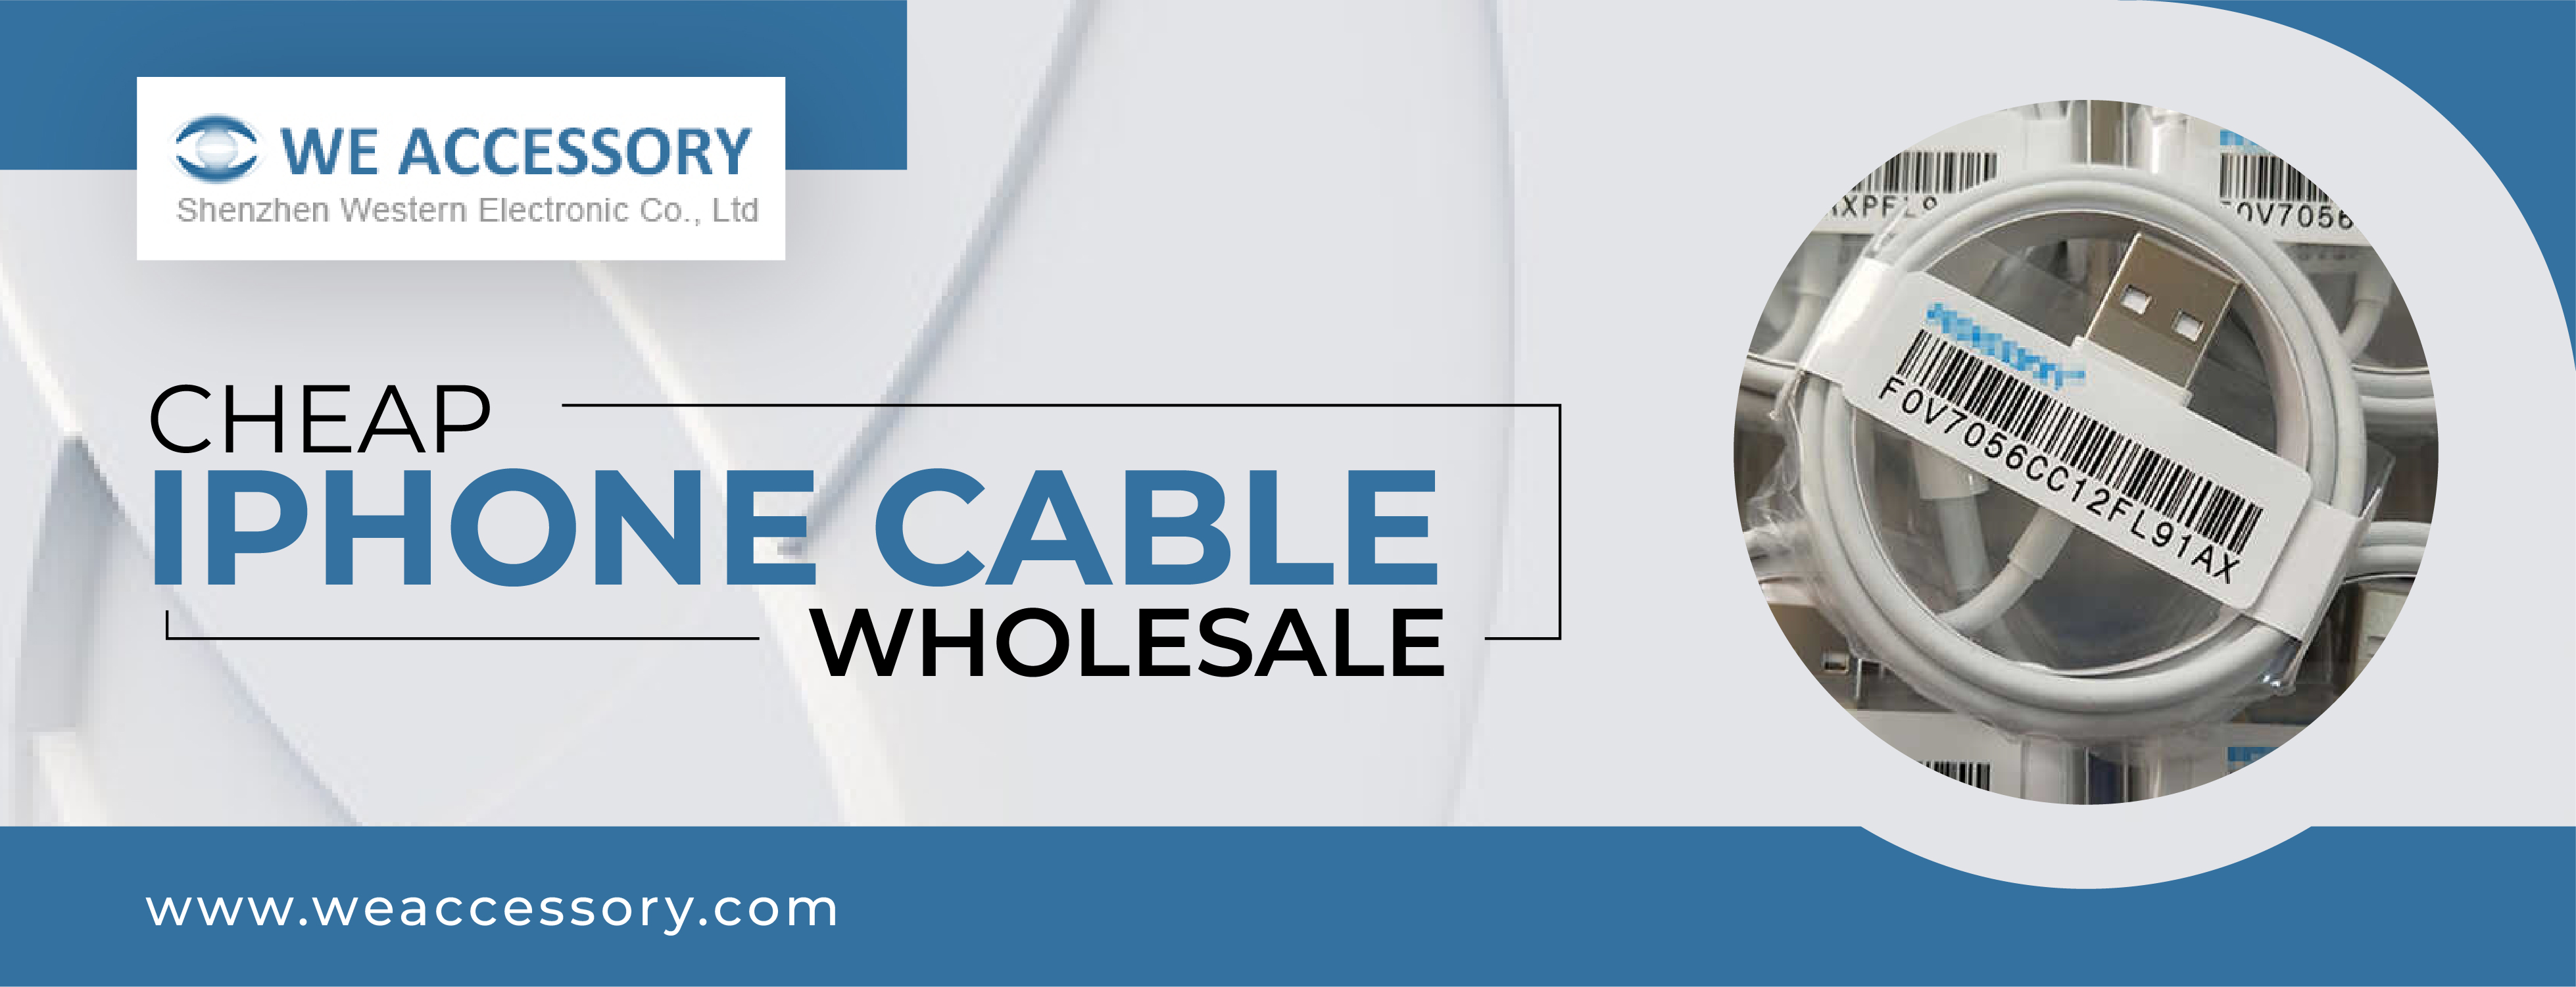 cheap iPhone cables wholesale 